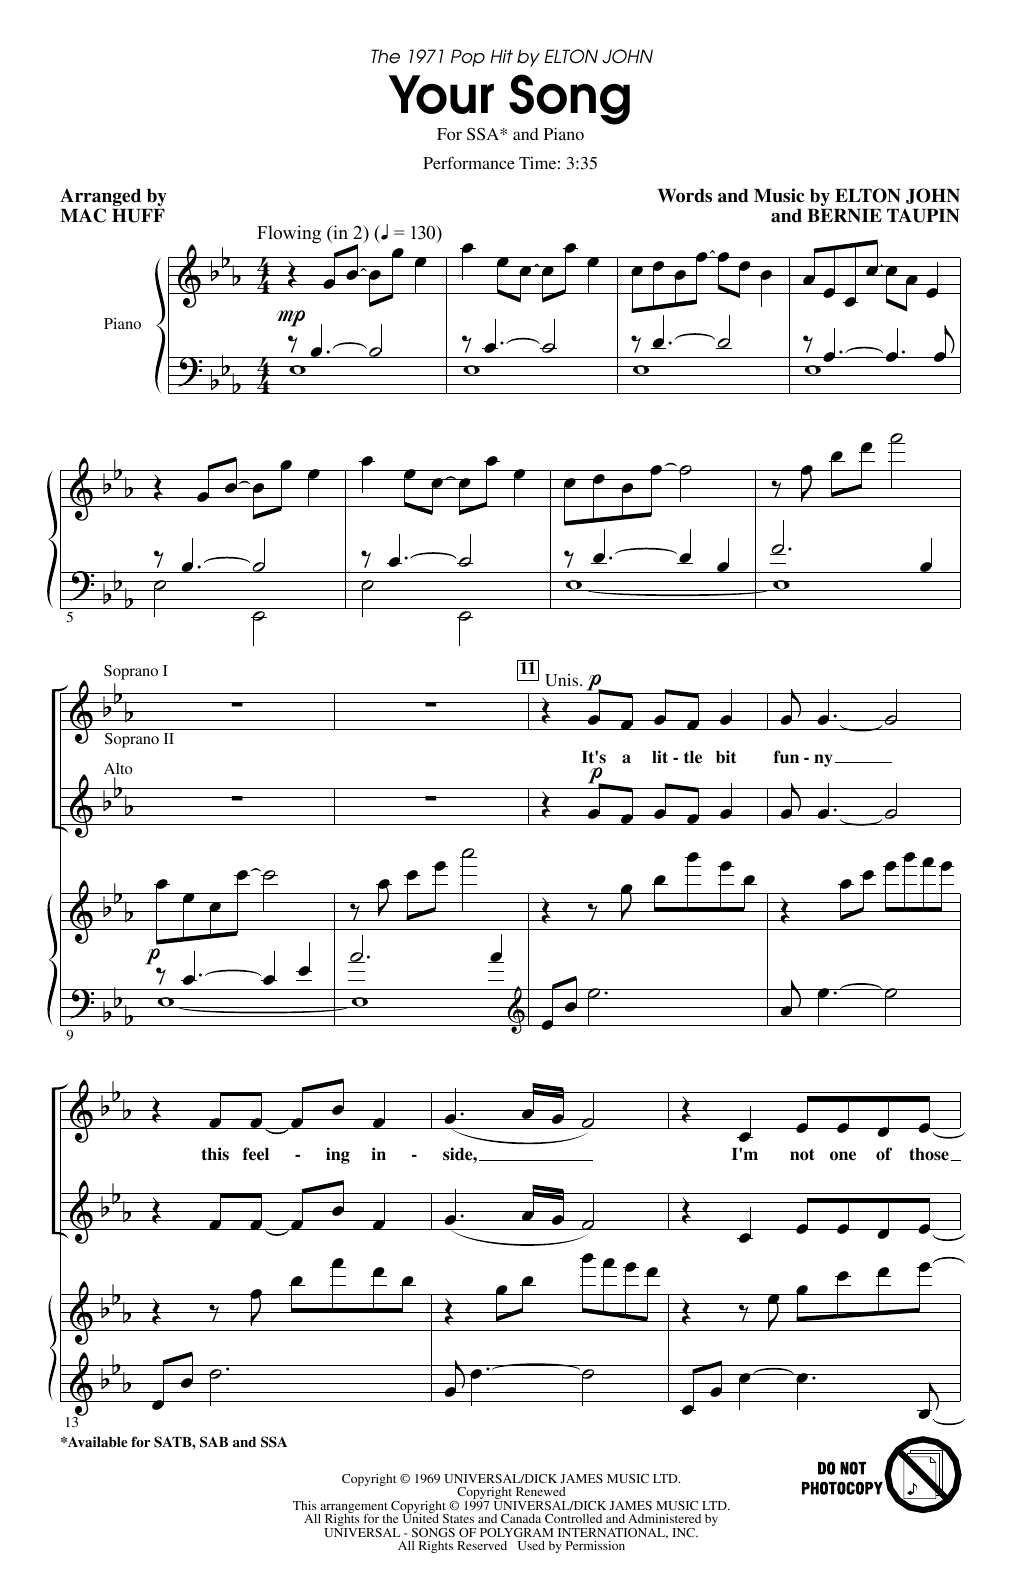 Elton John Your Song (arr. Mac Huff) Sheet Music Notes & Chords for SATB Choir - Download or Print PDF